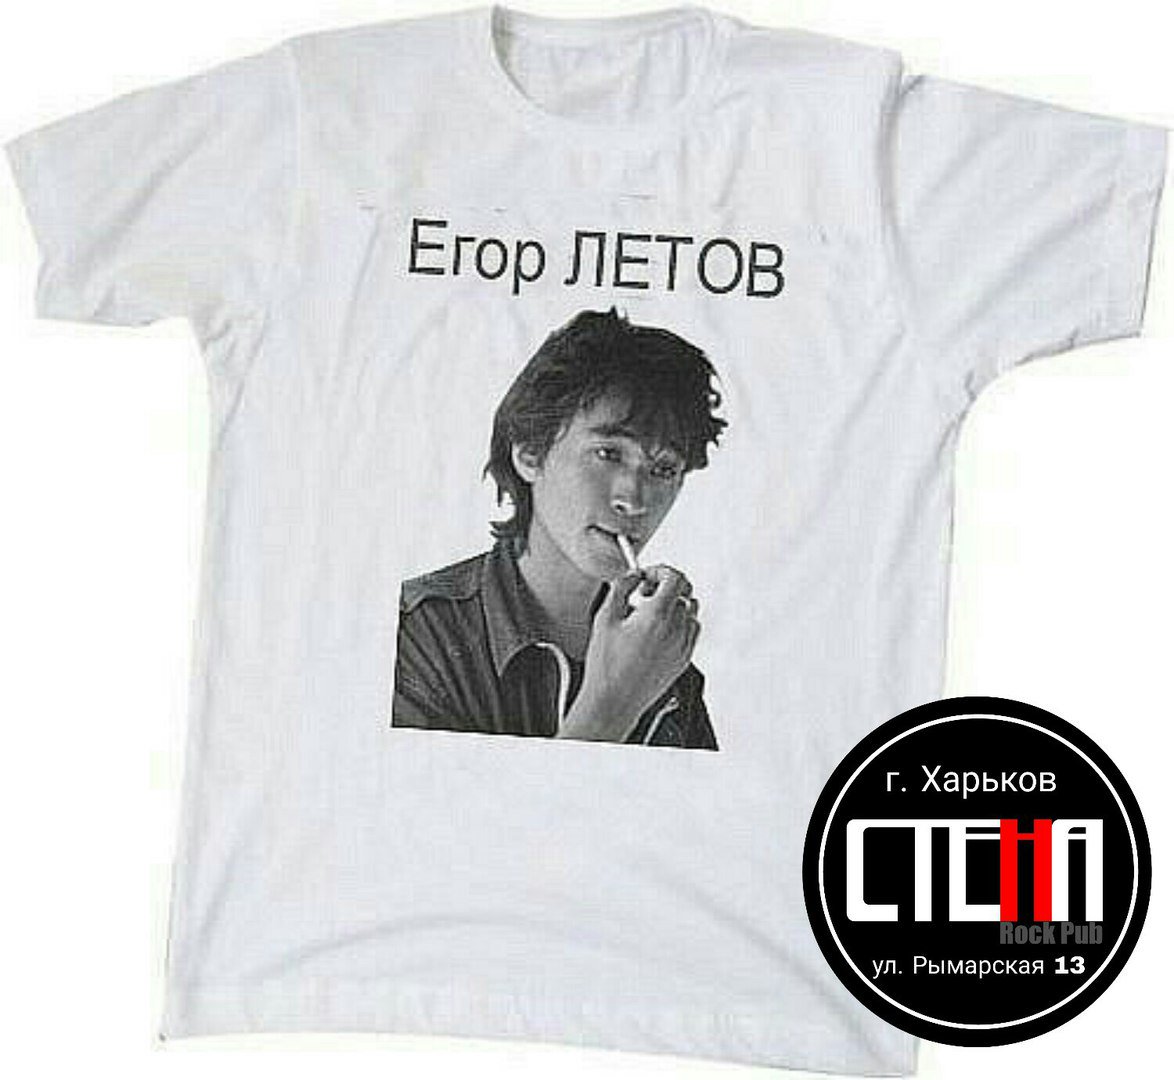 1174x1080, 113 Kb / Летов, футболка